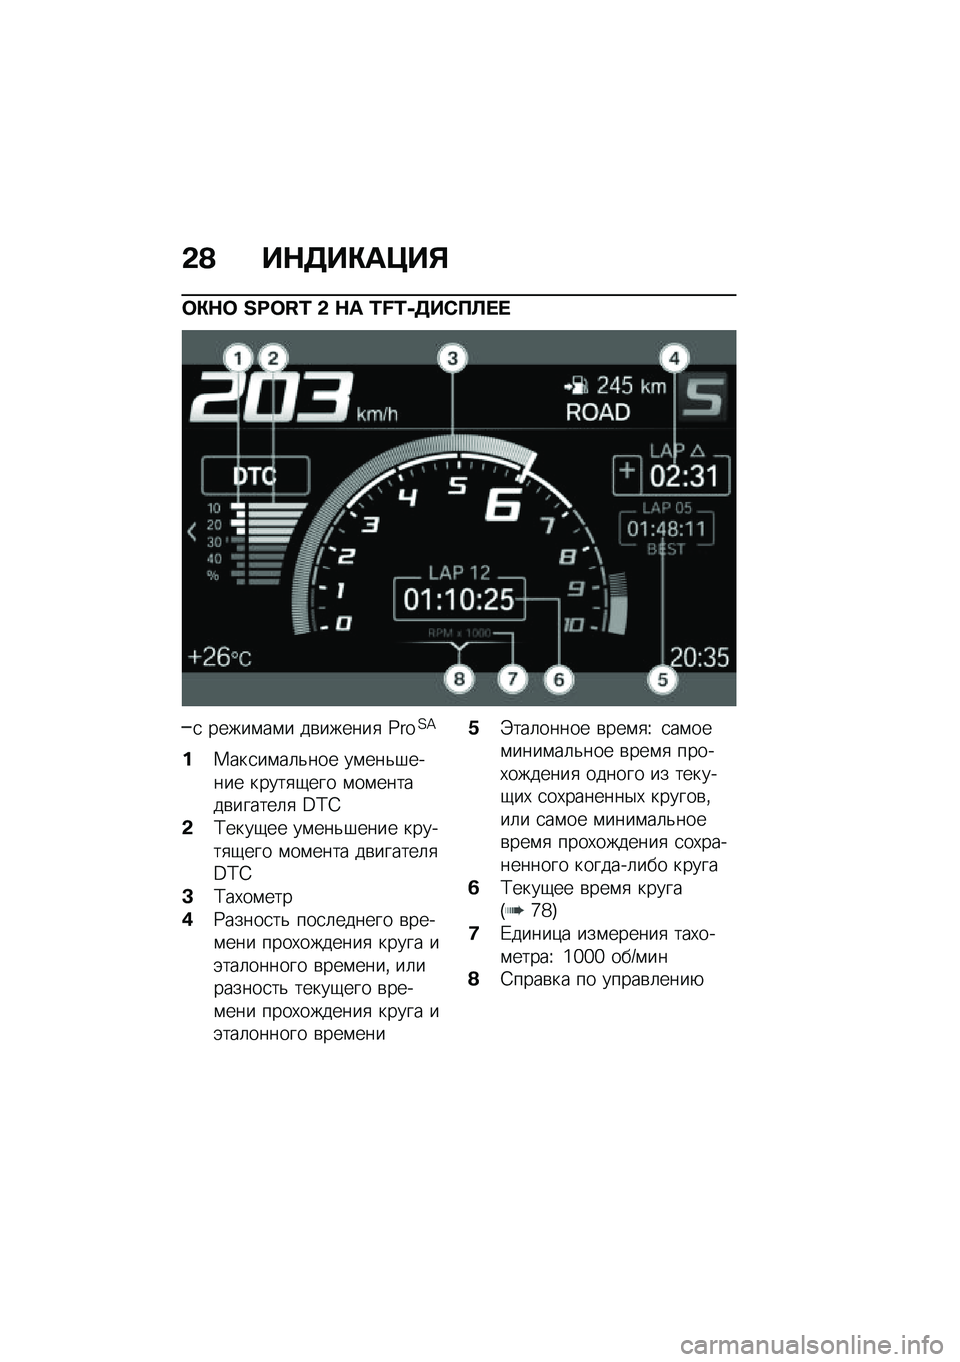 BMW MOTORRAD F 900 R 2020  Руководство по эксплуатации (in Russian) �-�A ��+���)�	�@��,
��)�+� �O�E�`�I�L �- �+�	 �L�M�L����1��
��
�
 �����\f��\f� ��\b������
 �Z���?�=
�%�1���
��\f��	�&��� ��\f���&�#����� �����
�-��� �\f